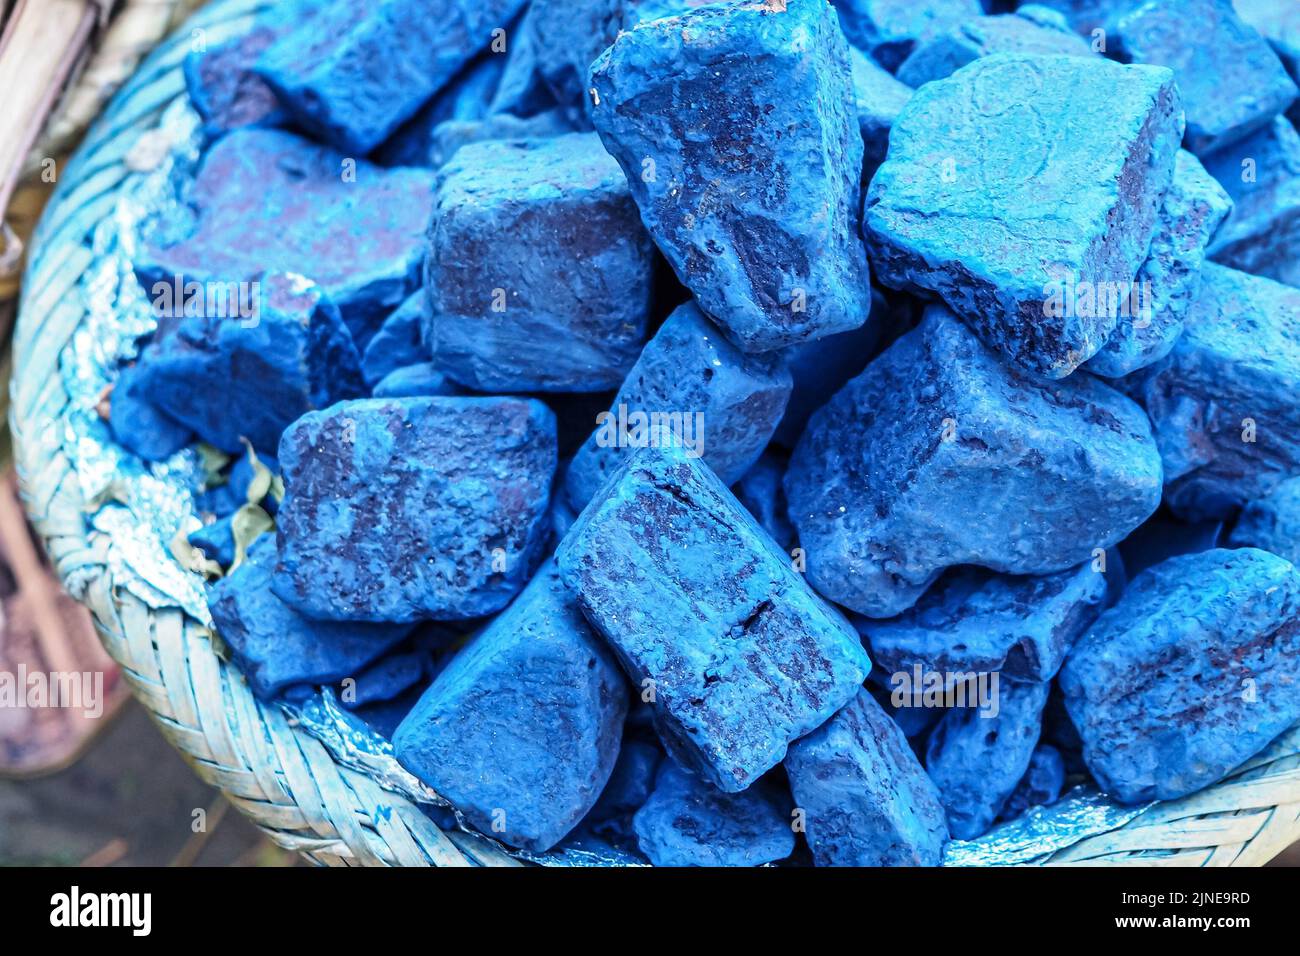 Blue indigo color stones displayed at traditional souk - street ...